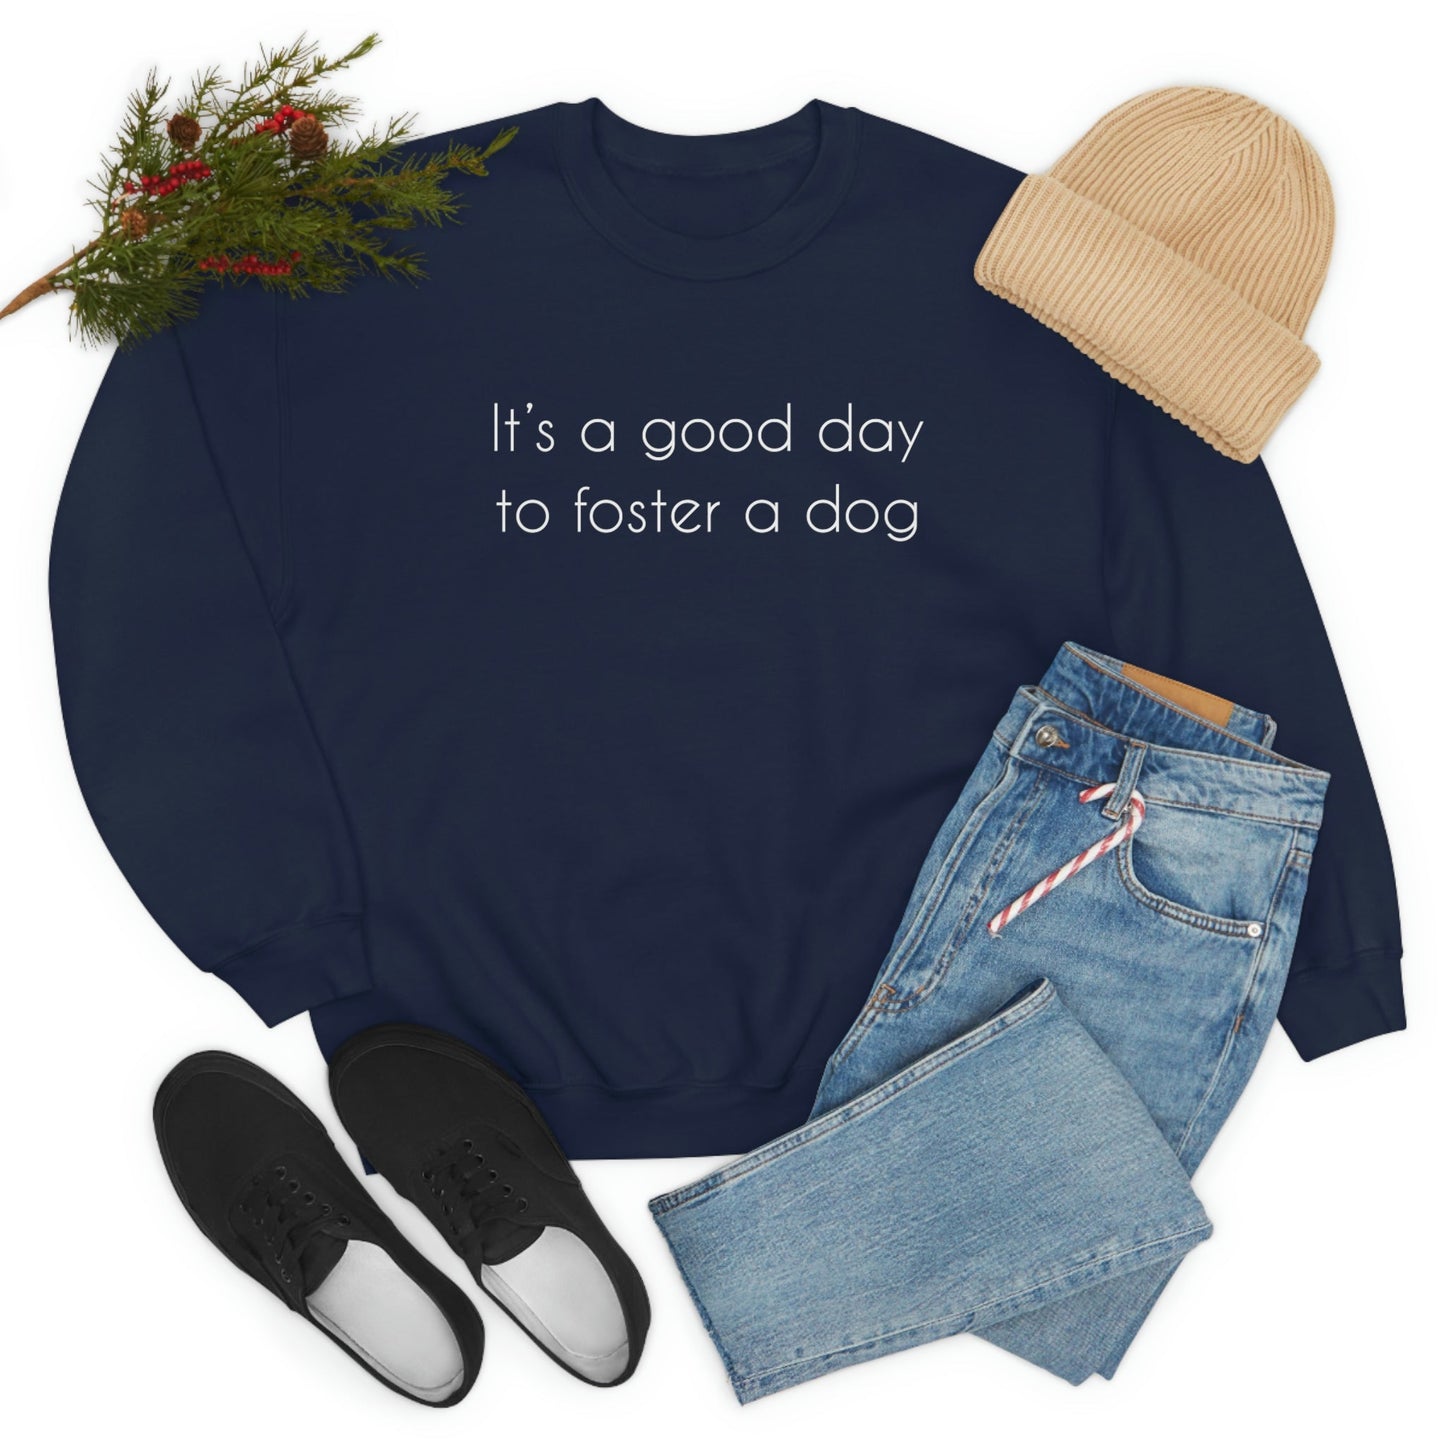 It's A Good Day To Foster A Dog | Crewneck Sweatshirt - Detezi Designs-28094436589402640043